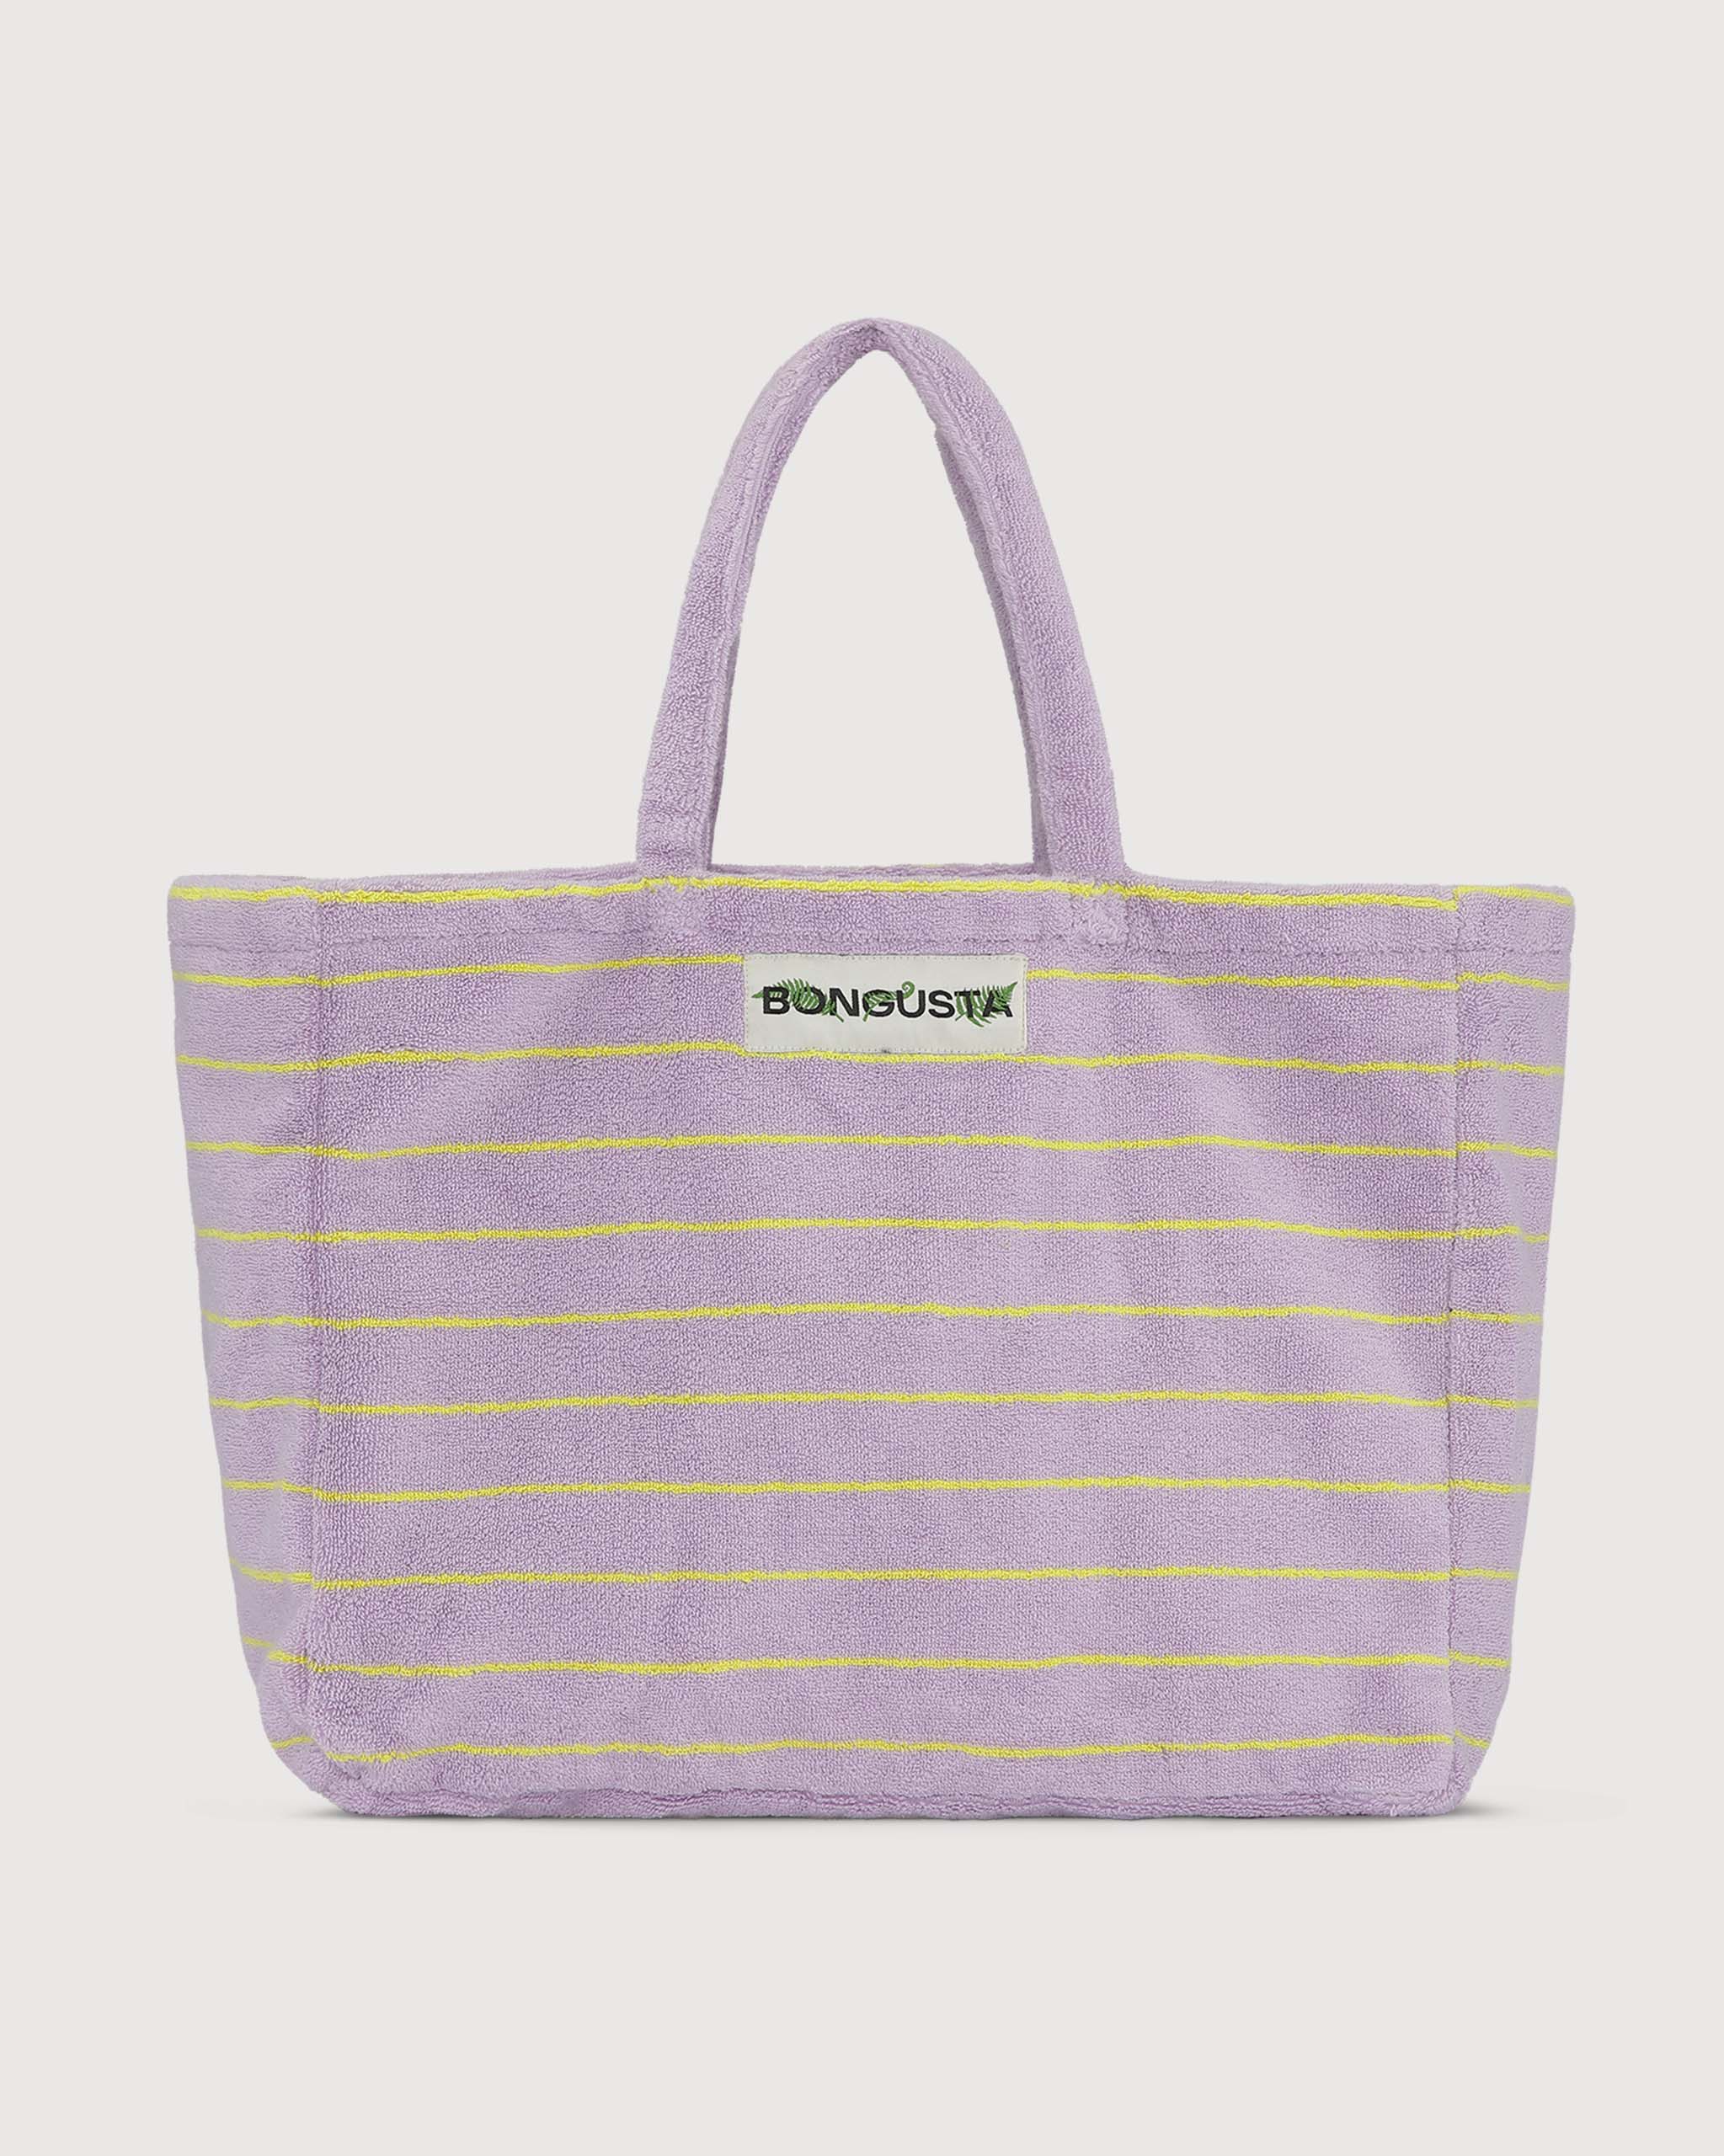 Bongusta, Product image, Naram Weekendtaske, lilac & neon yellow, 3 of 4}